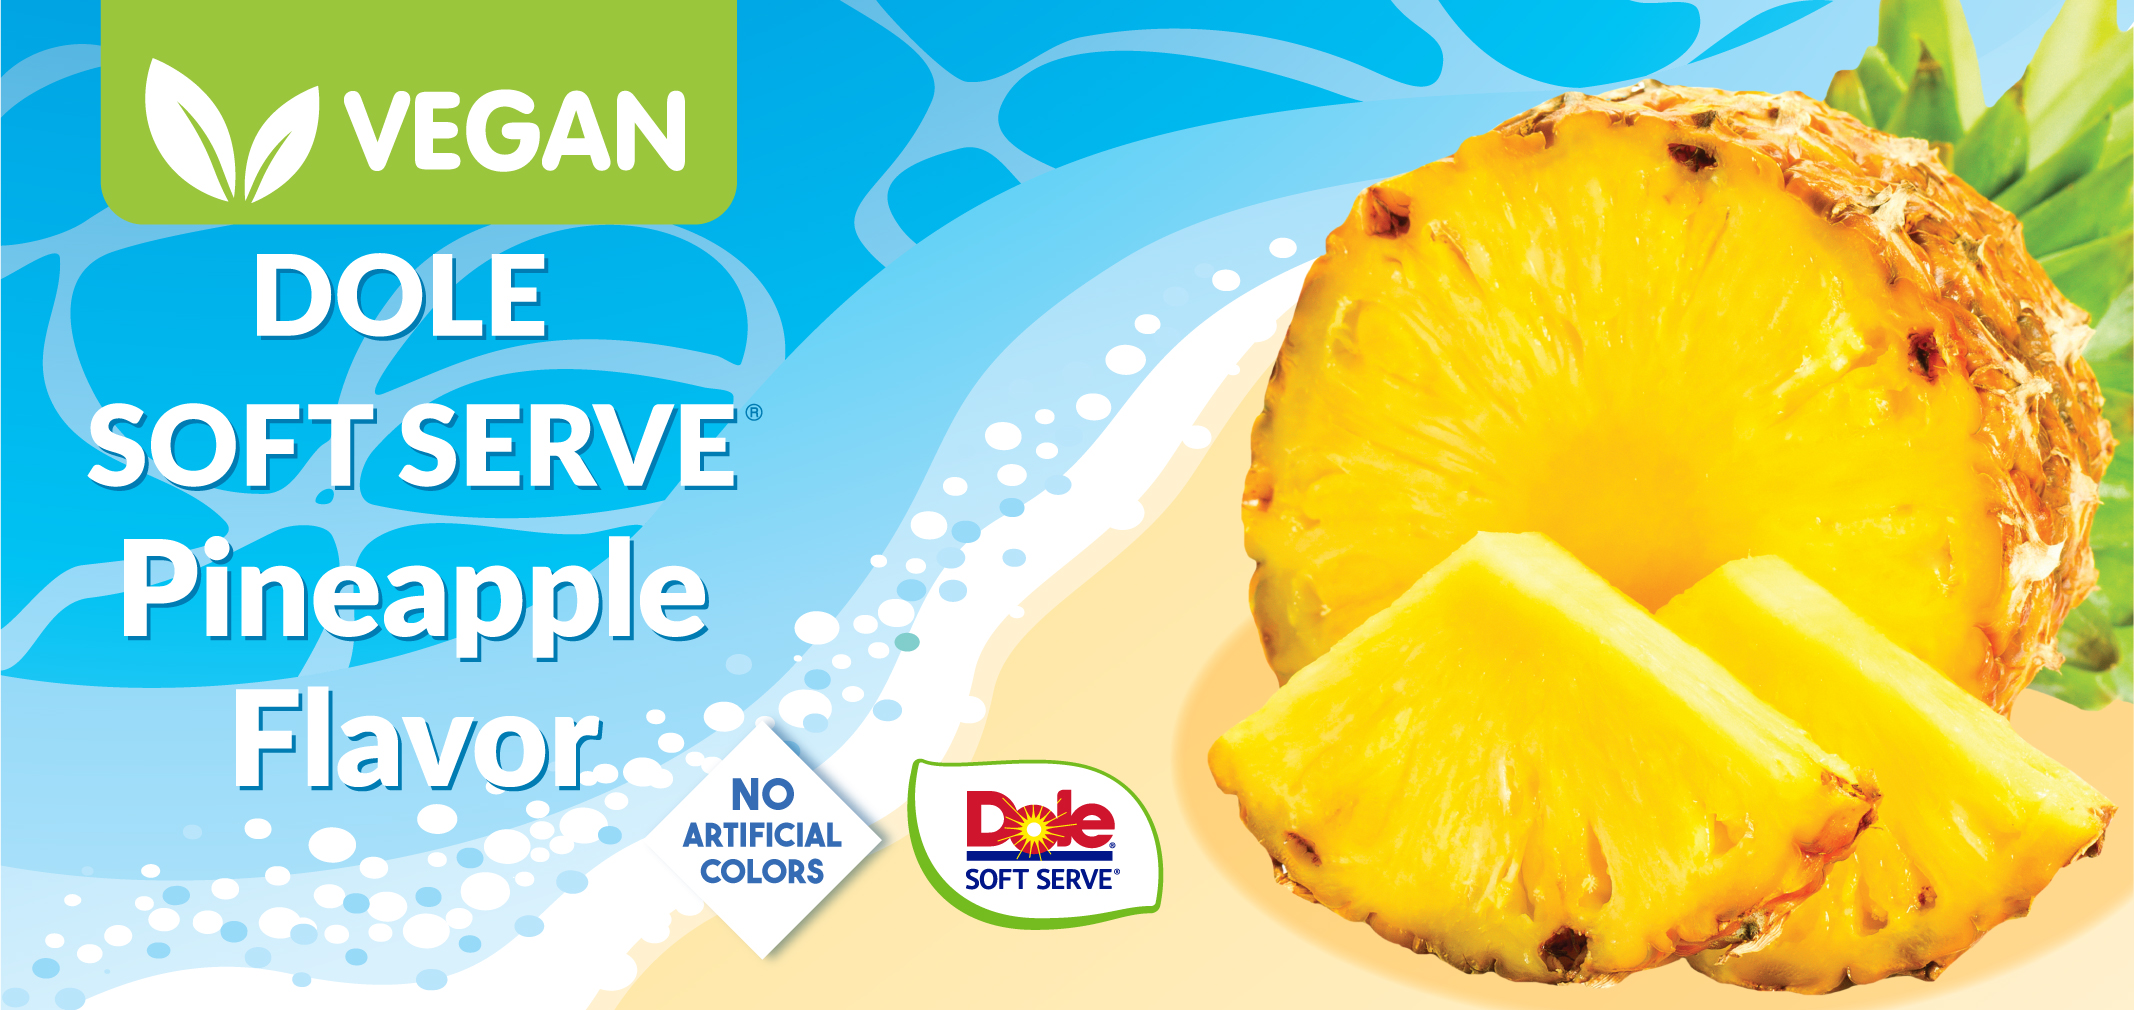 Dole® Soft Serve Pineapple Flavor label image